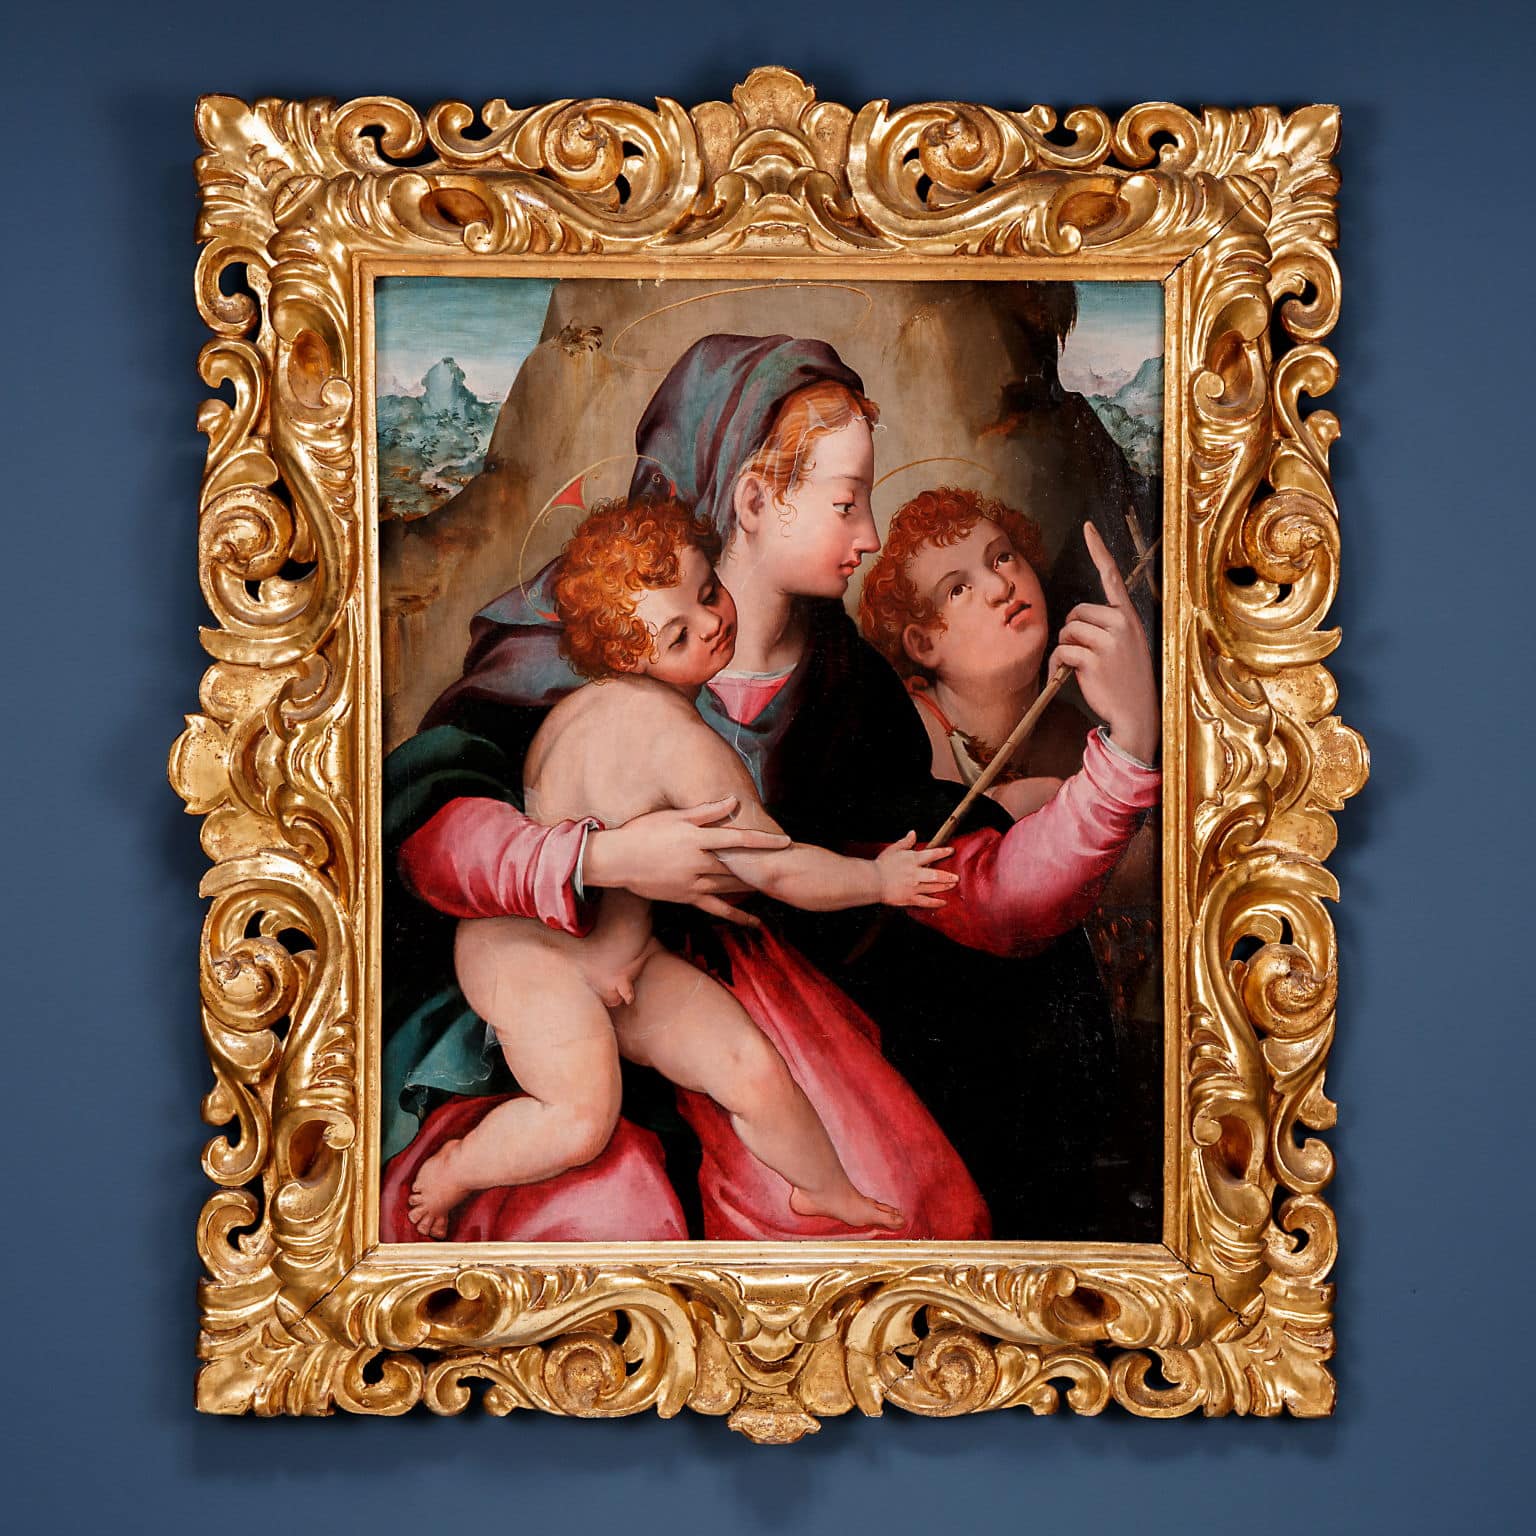 Carlo Portelli, Madonna and Child with St. John the Baptist, c. 1540-1560